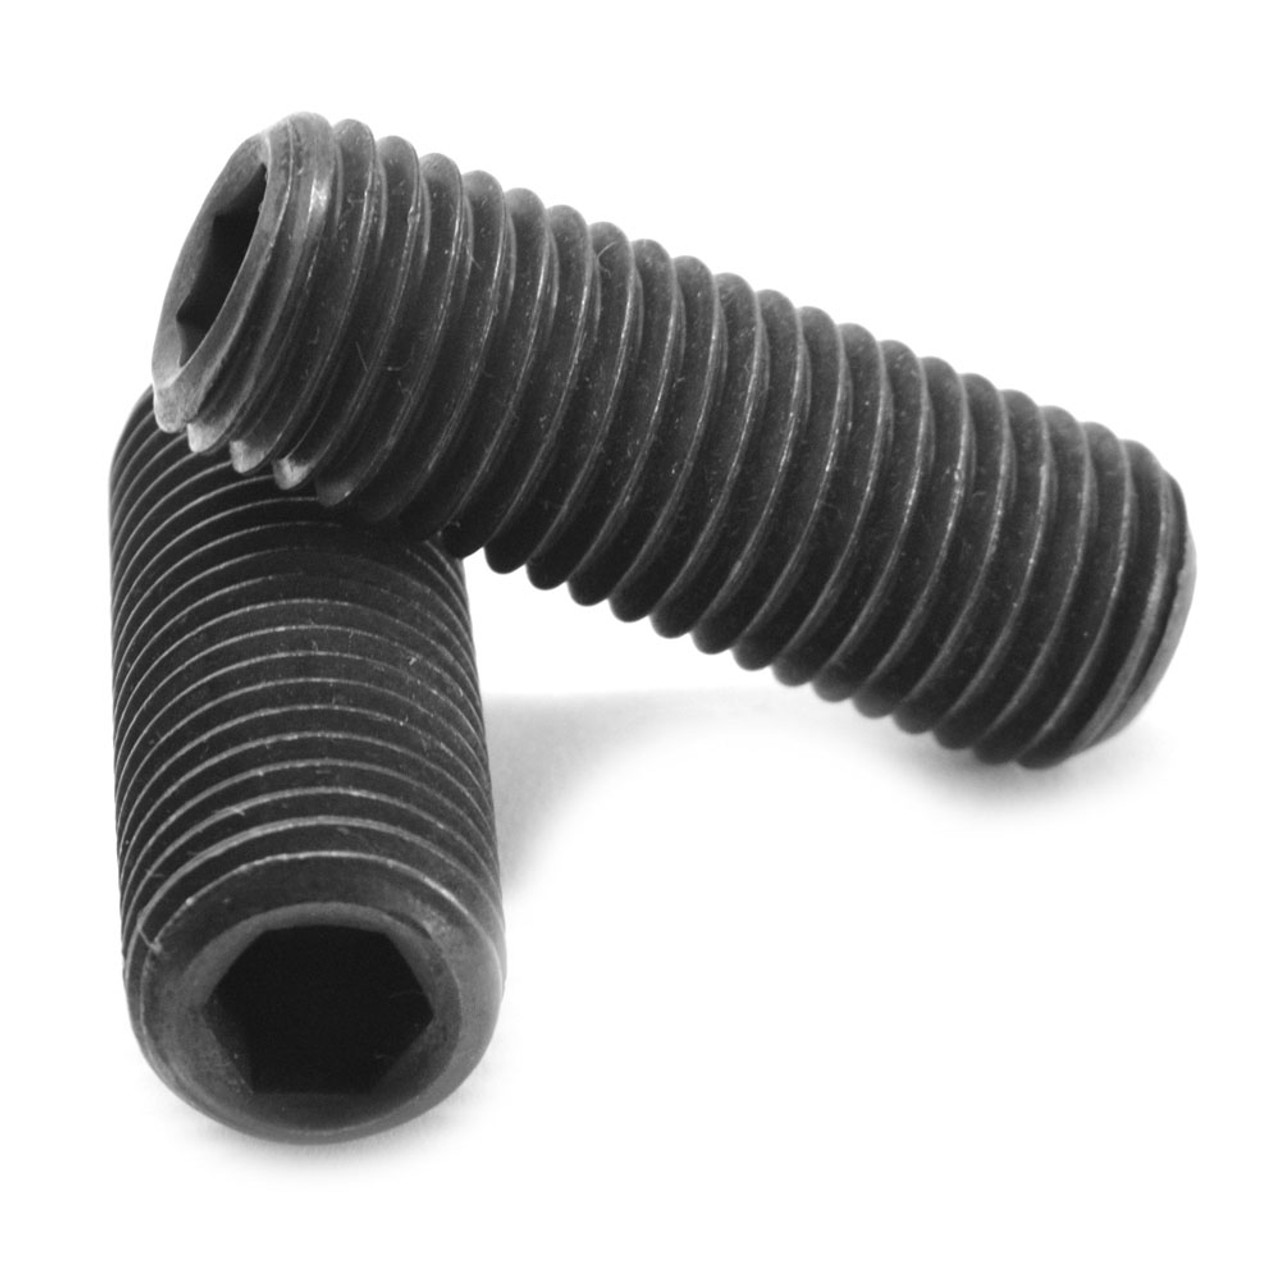 7/16"-14 x 7/8" Coarse Thread Socket Set Screw Cup Point Alloy Steel Black Oxide